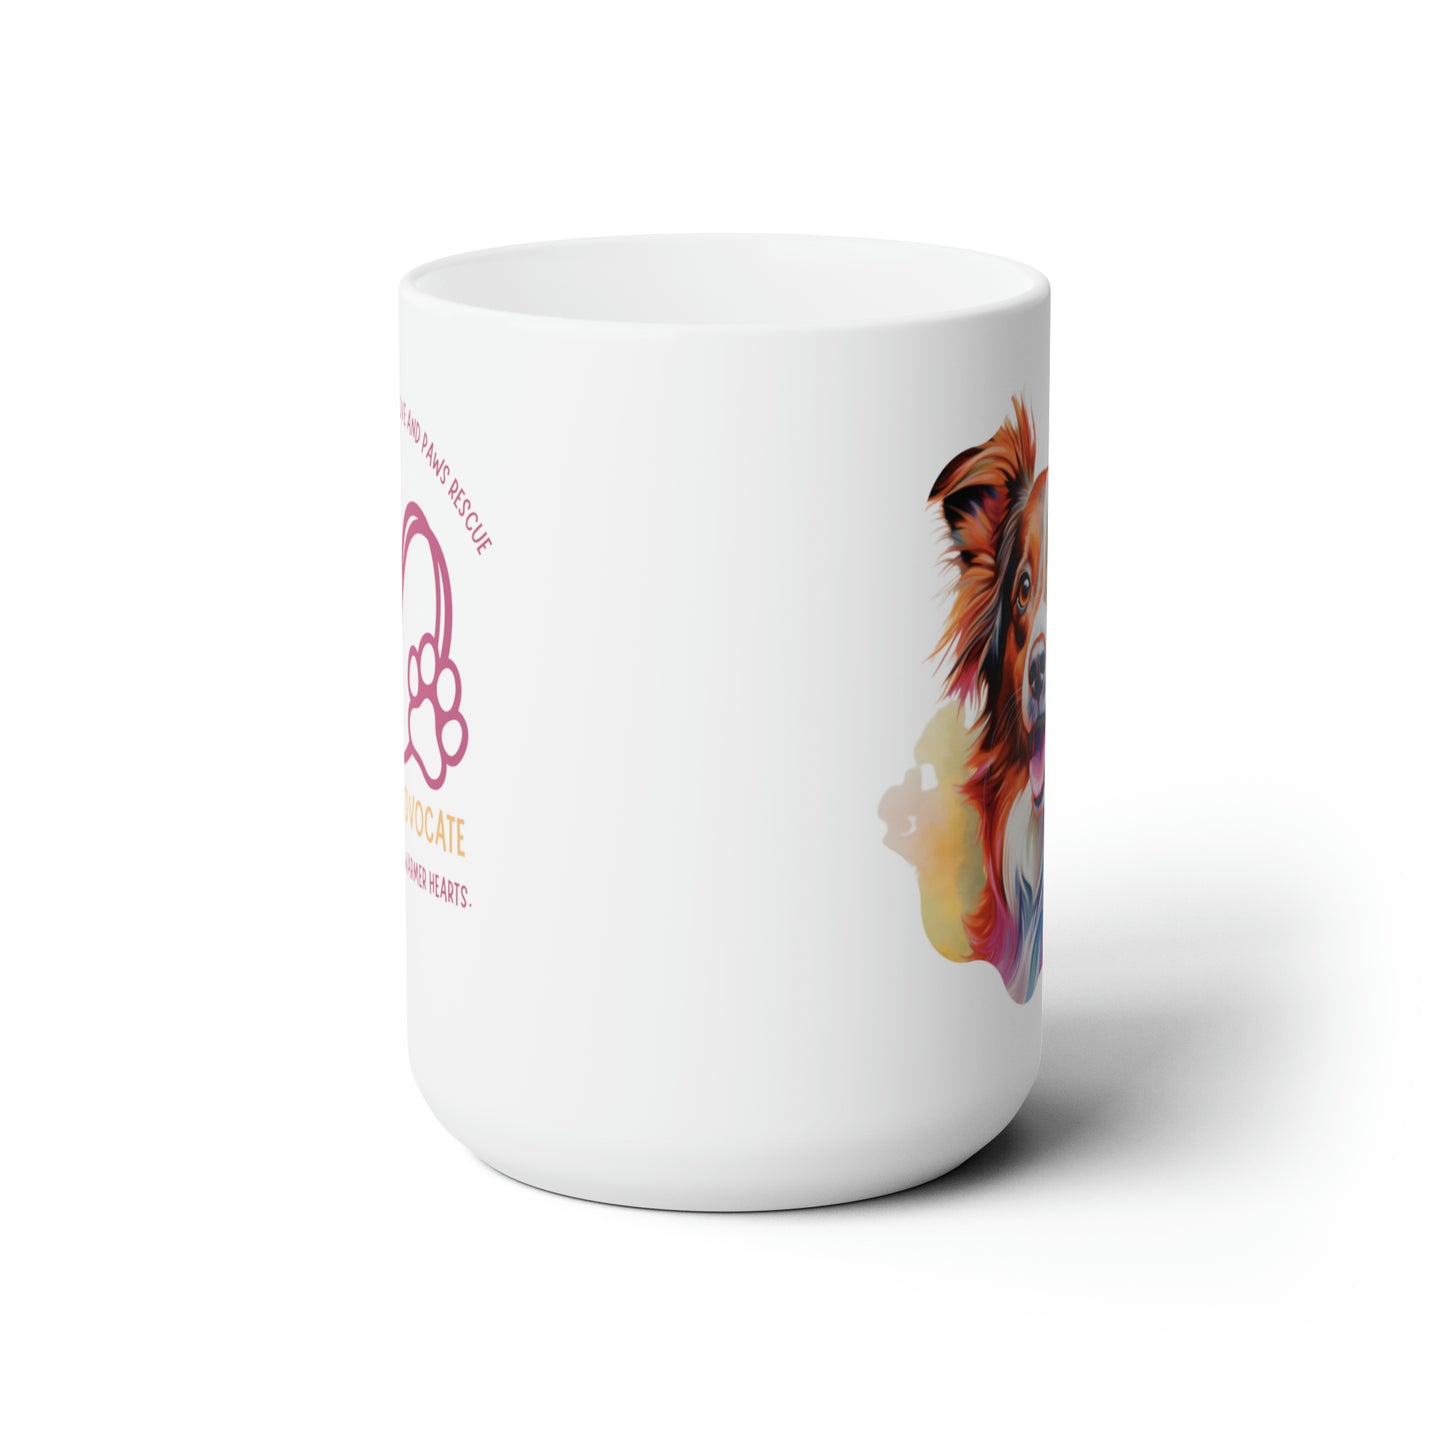 Lady Woof Ceramic Mug 15oz